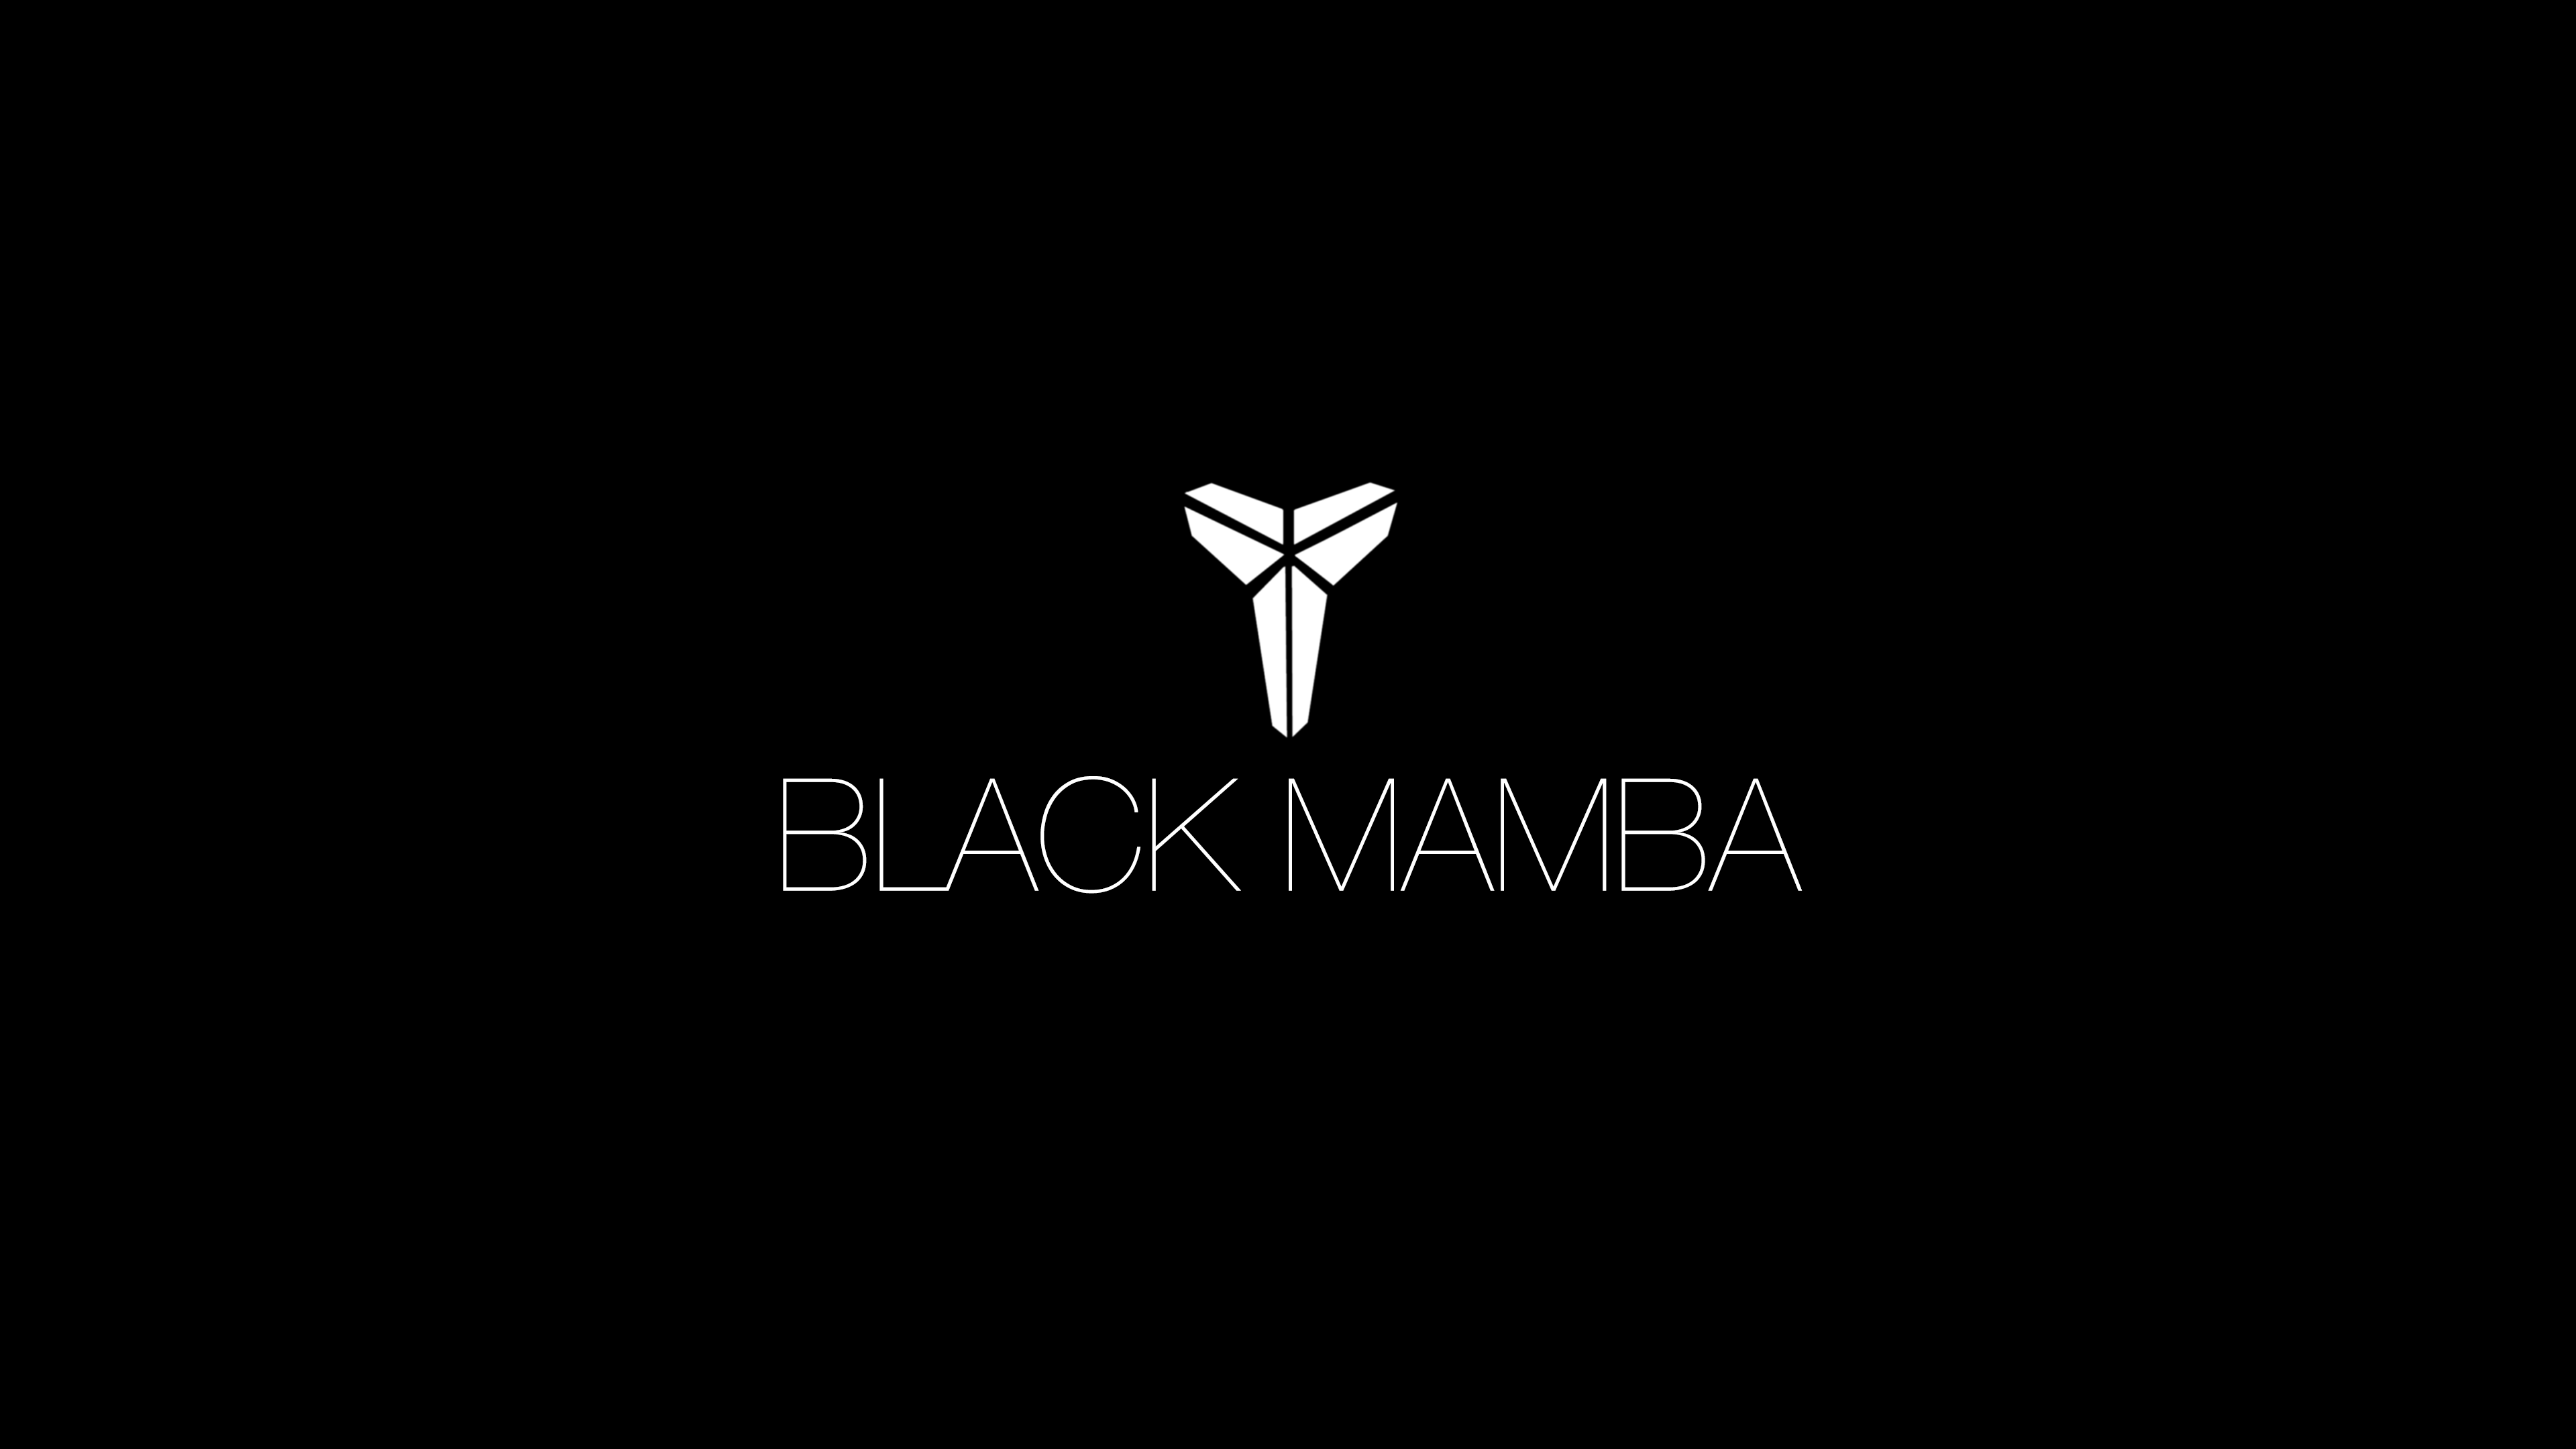 Black Mamba Kobe Logo - Black Mamba Logo Kobe Bryant wallpaper 2018 in Basketball